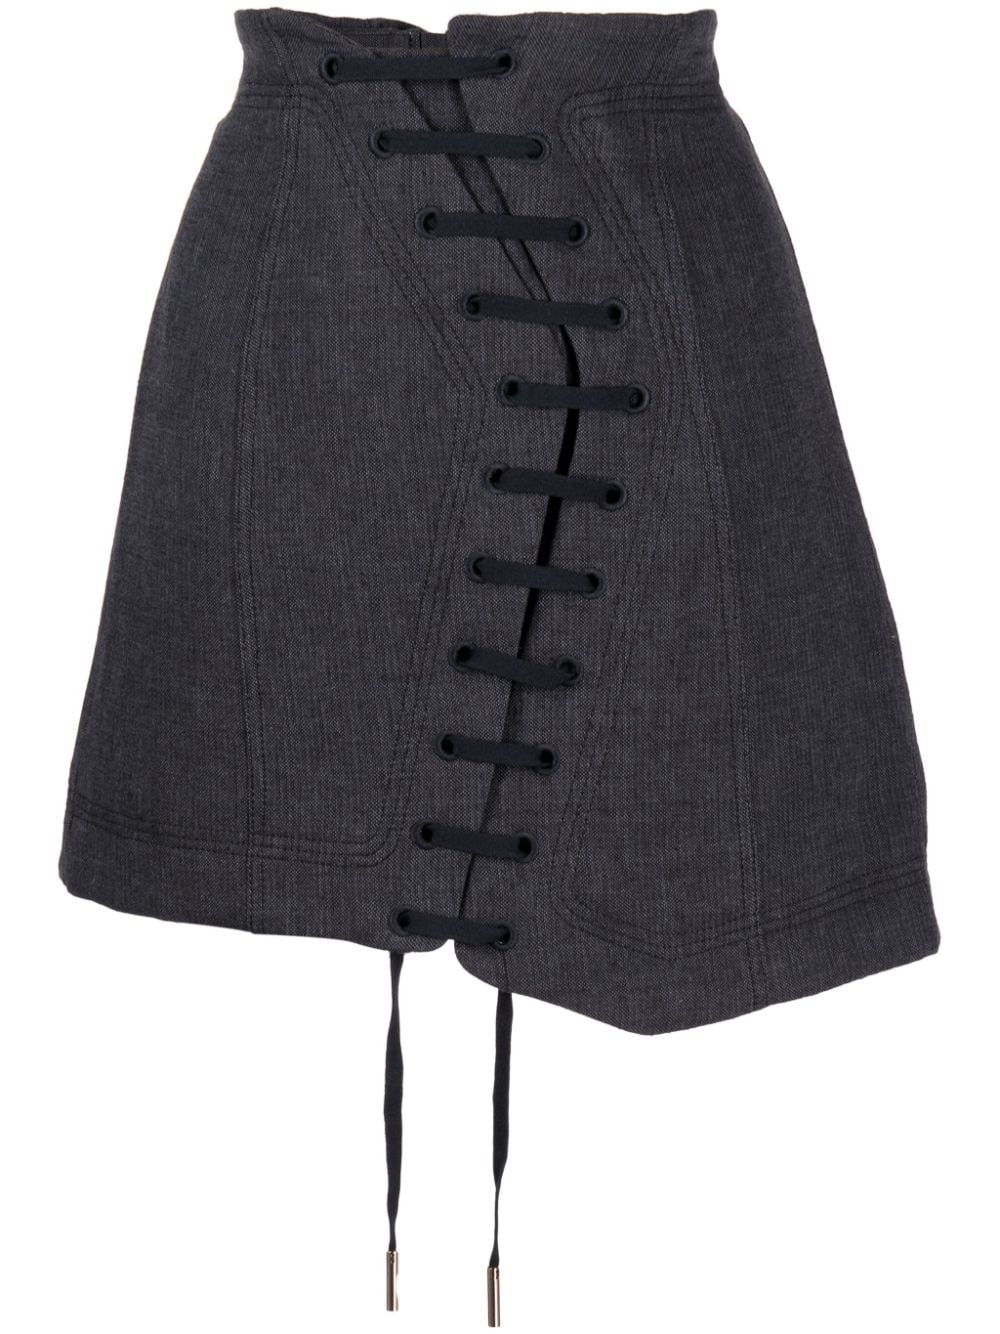 Acler Elmore lace-up miniskirt - Black von Acler